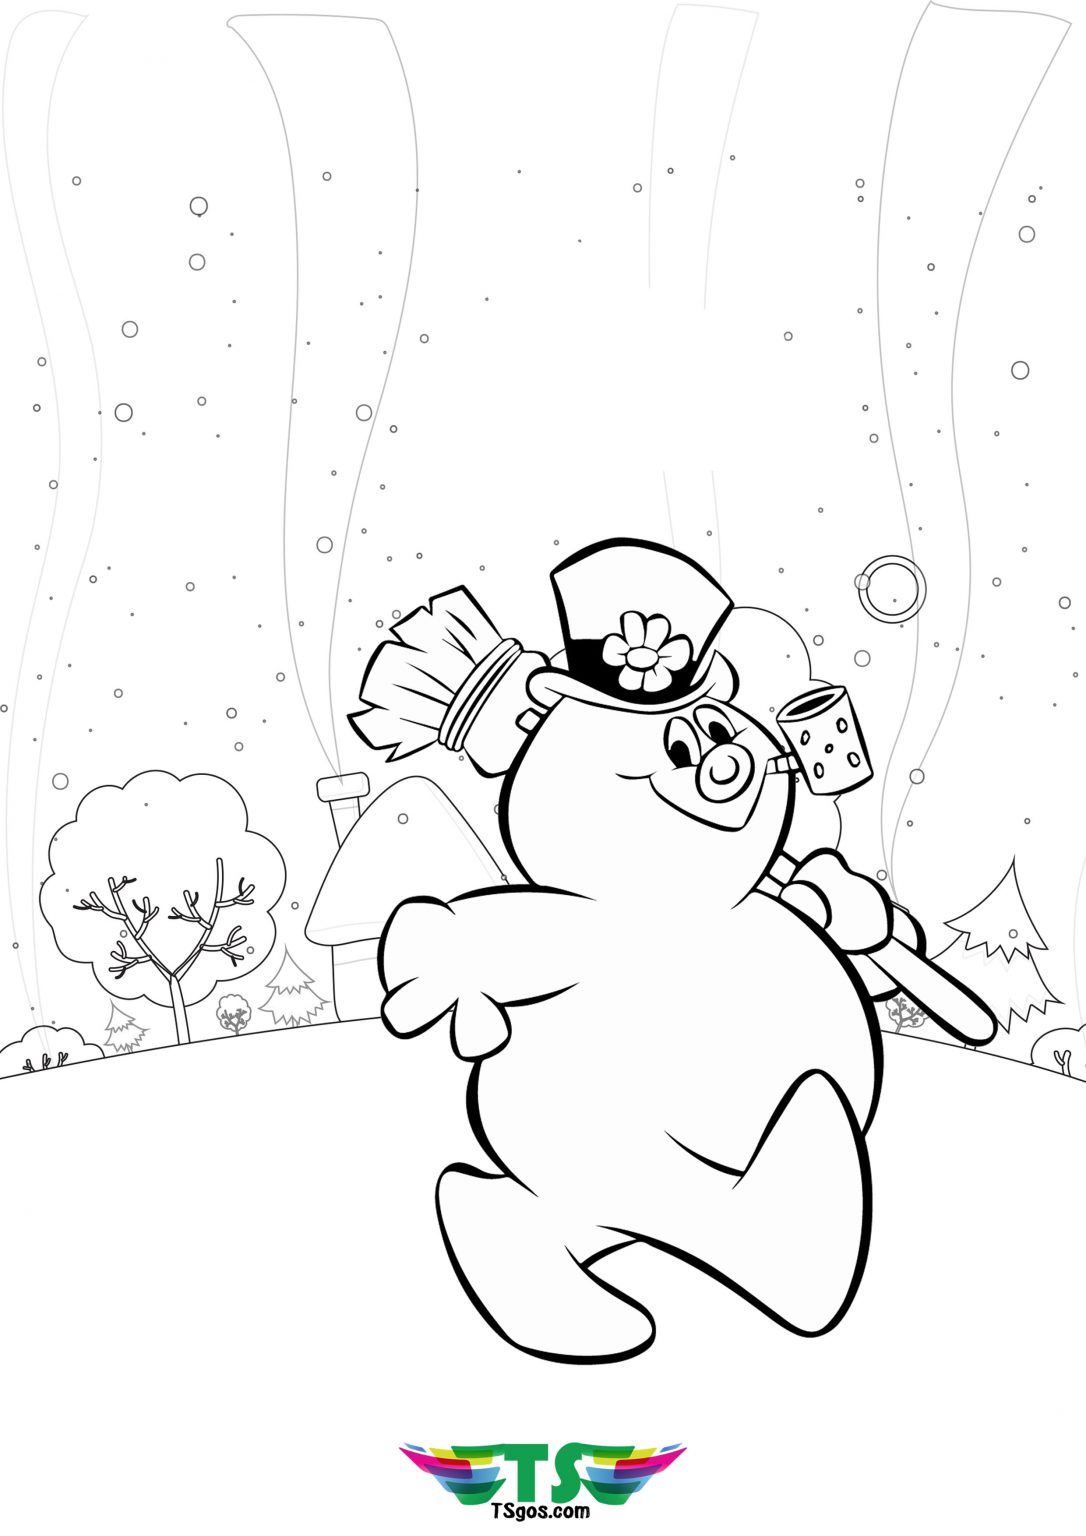 happy-frosty-the-snowman-coloring-page-tsgos-tsgos